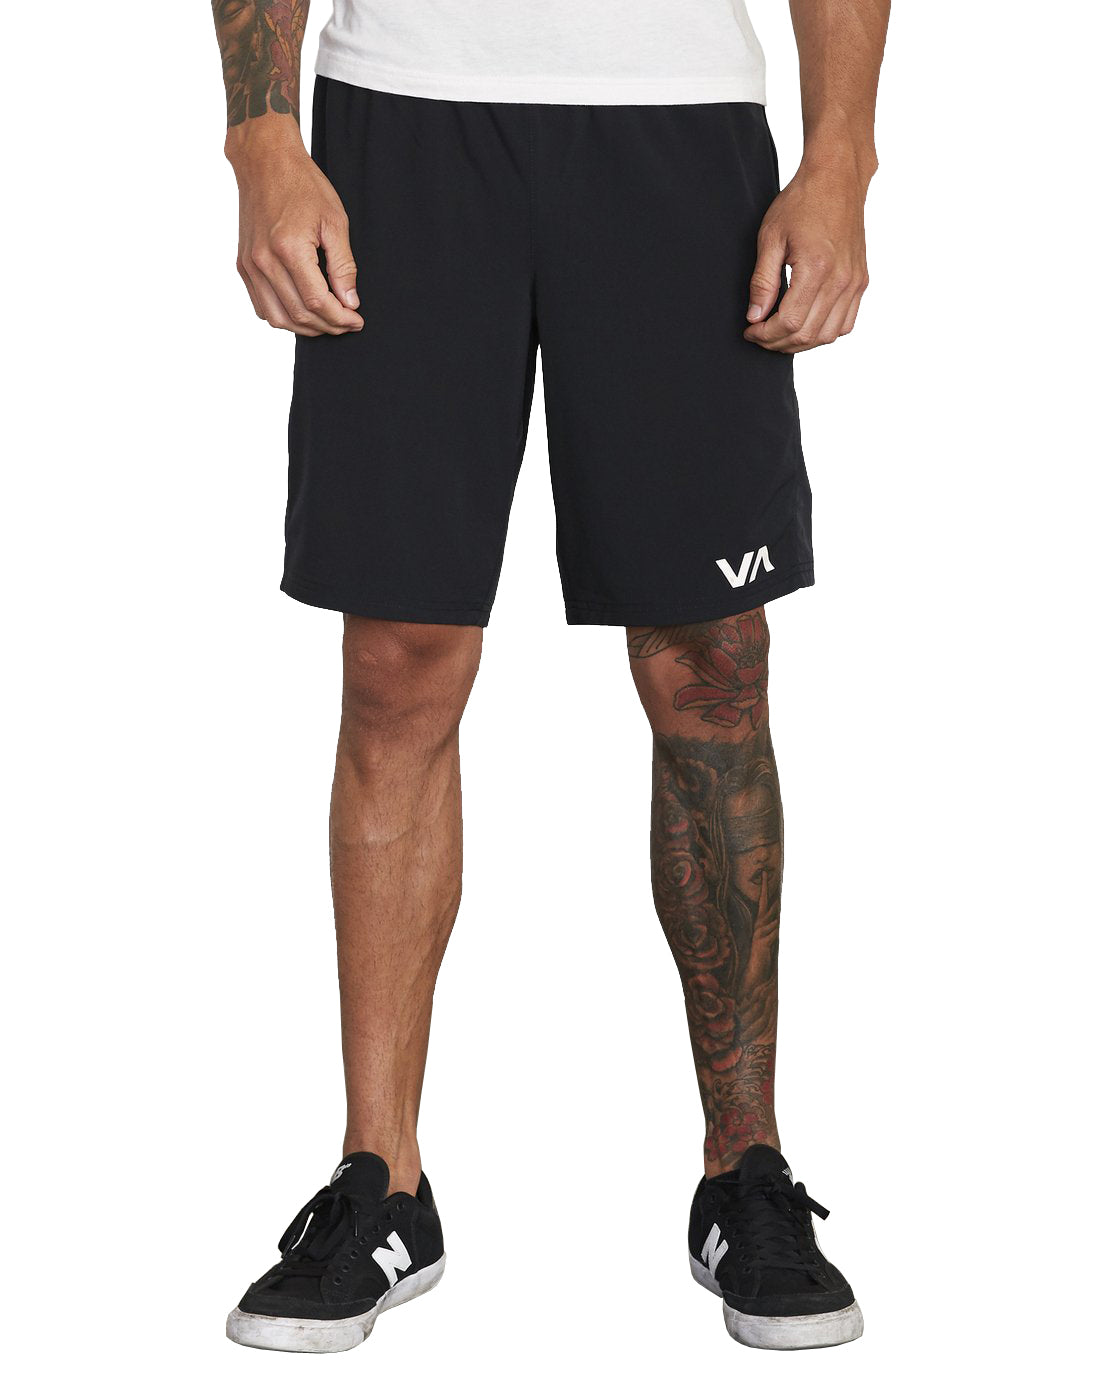 RVCA Yogger All Day Shorts BLK XL